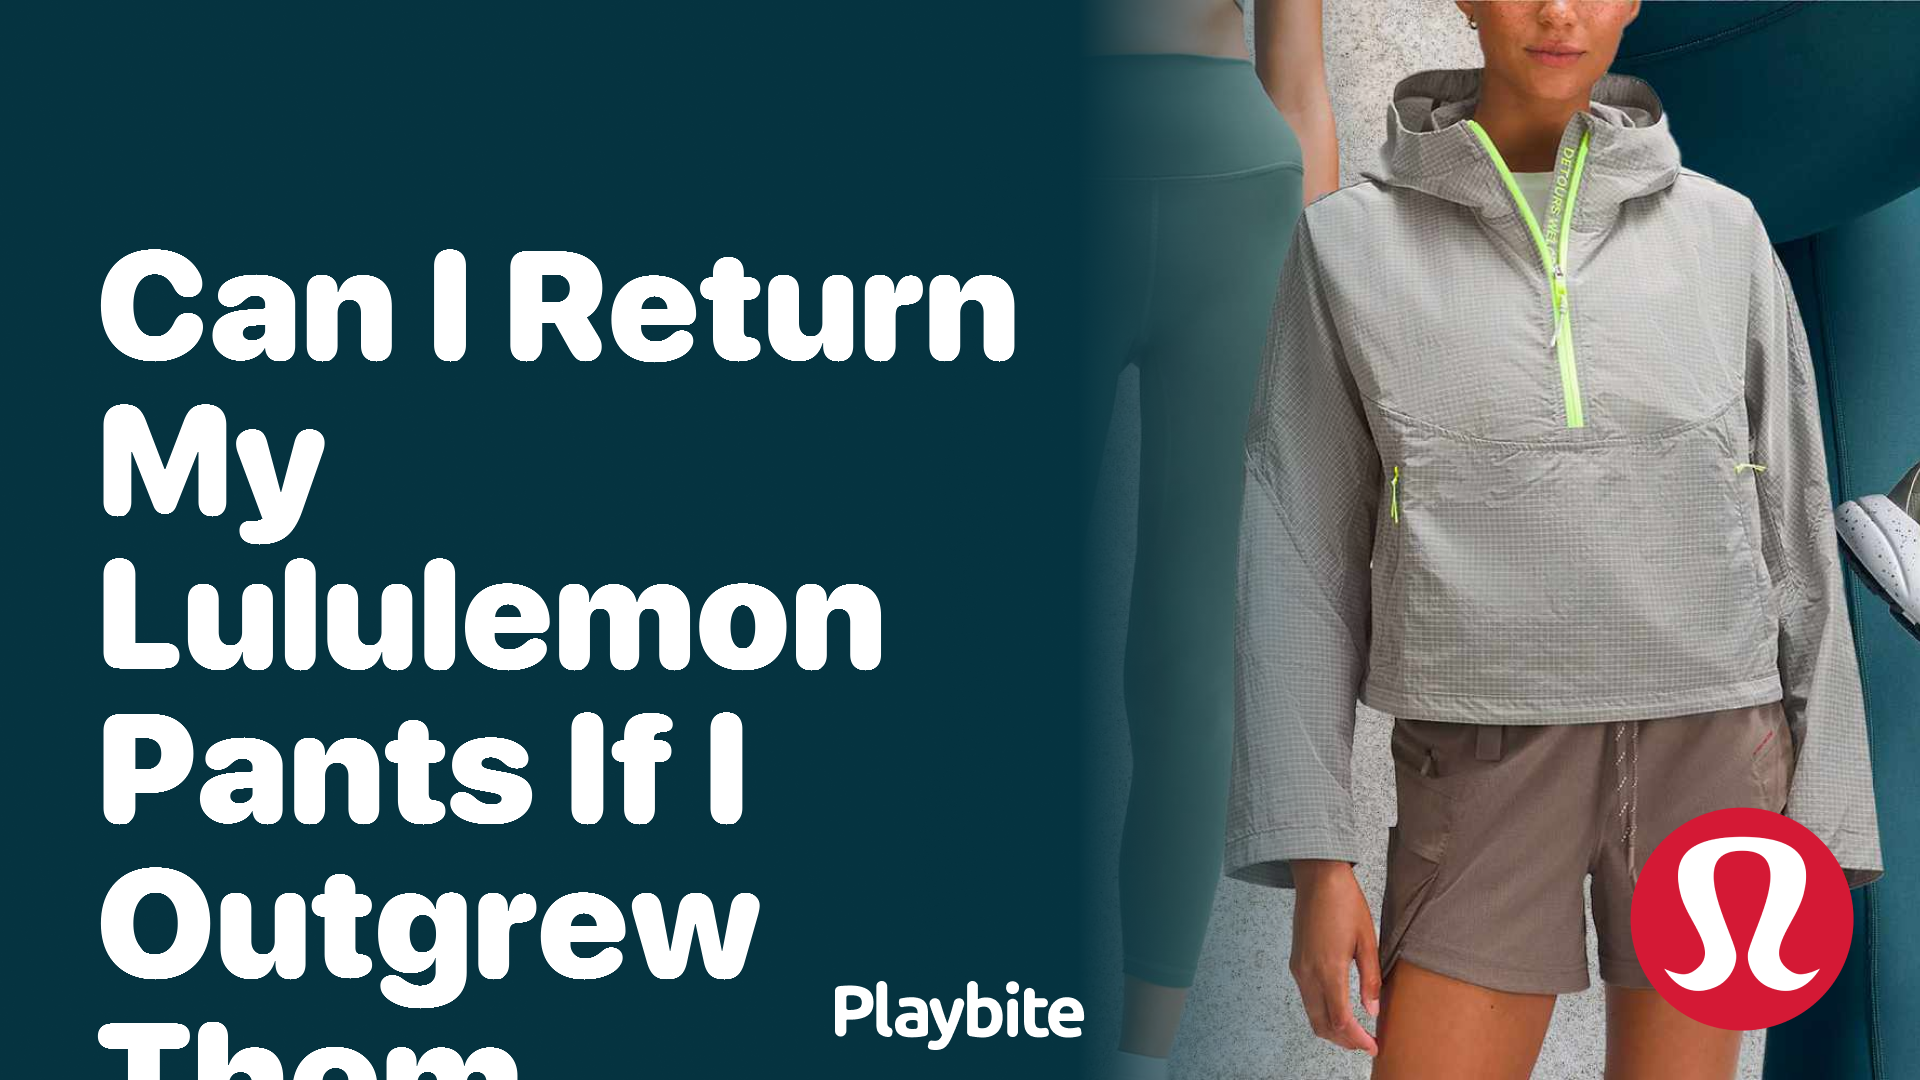 Can I Return My Lululemon Pants If I Outgrew Them?